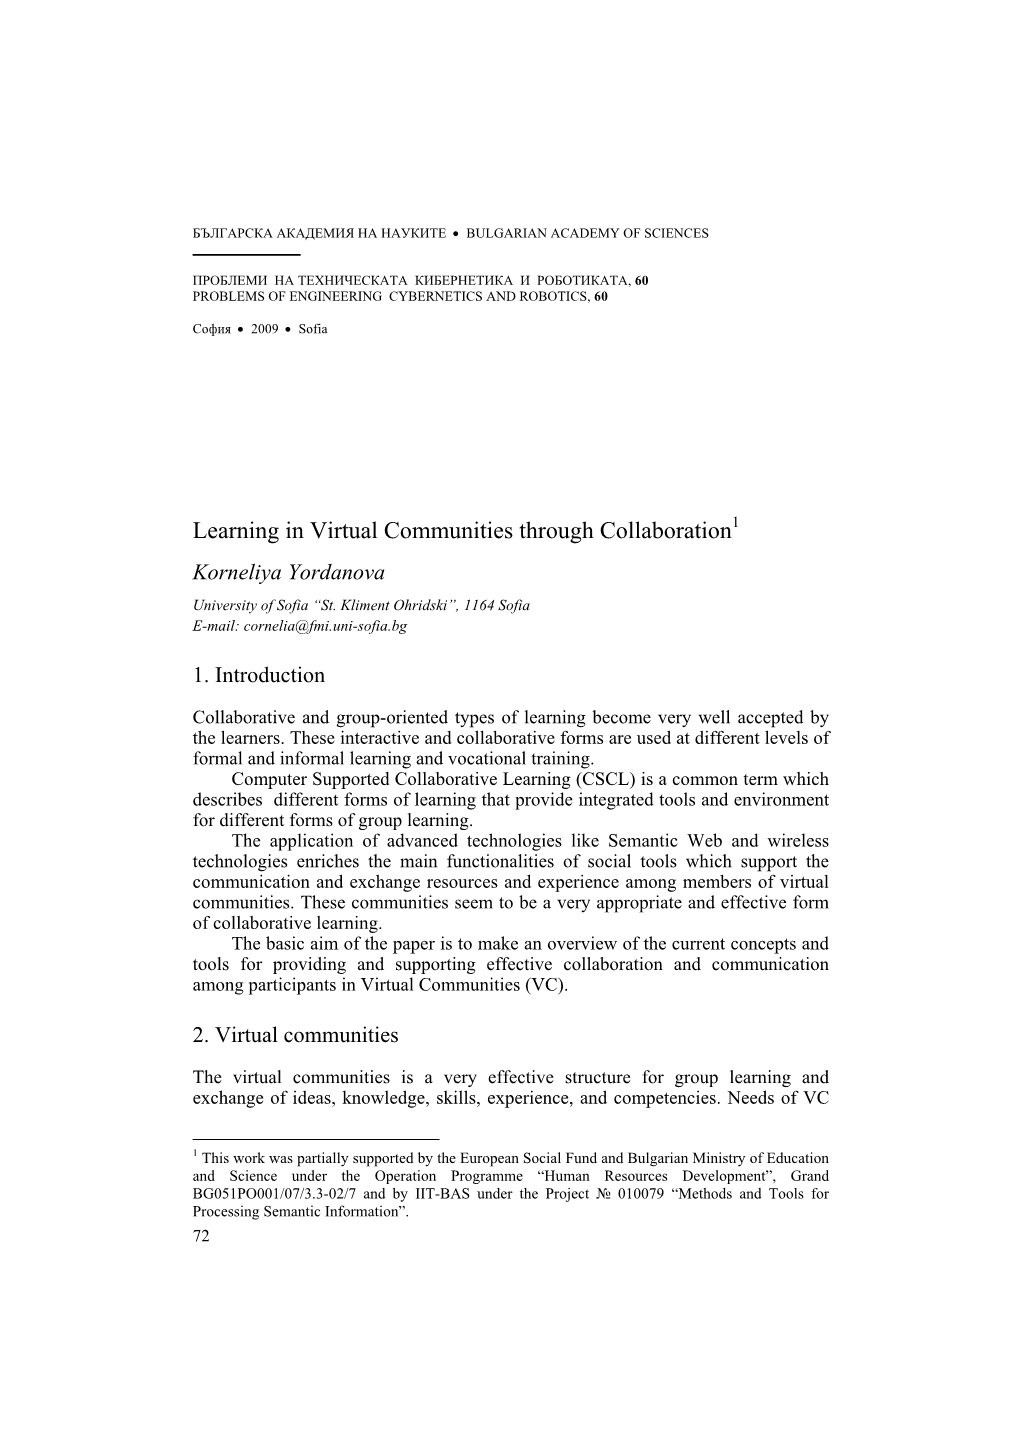 Learning in Virtual Communities Through Collaboration1 Korneliya Yordanova University of Sofia “St